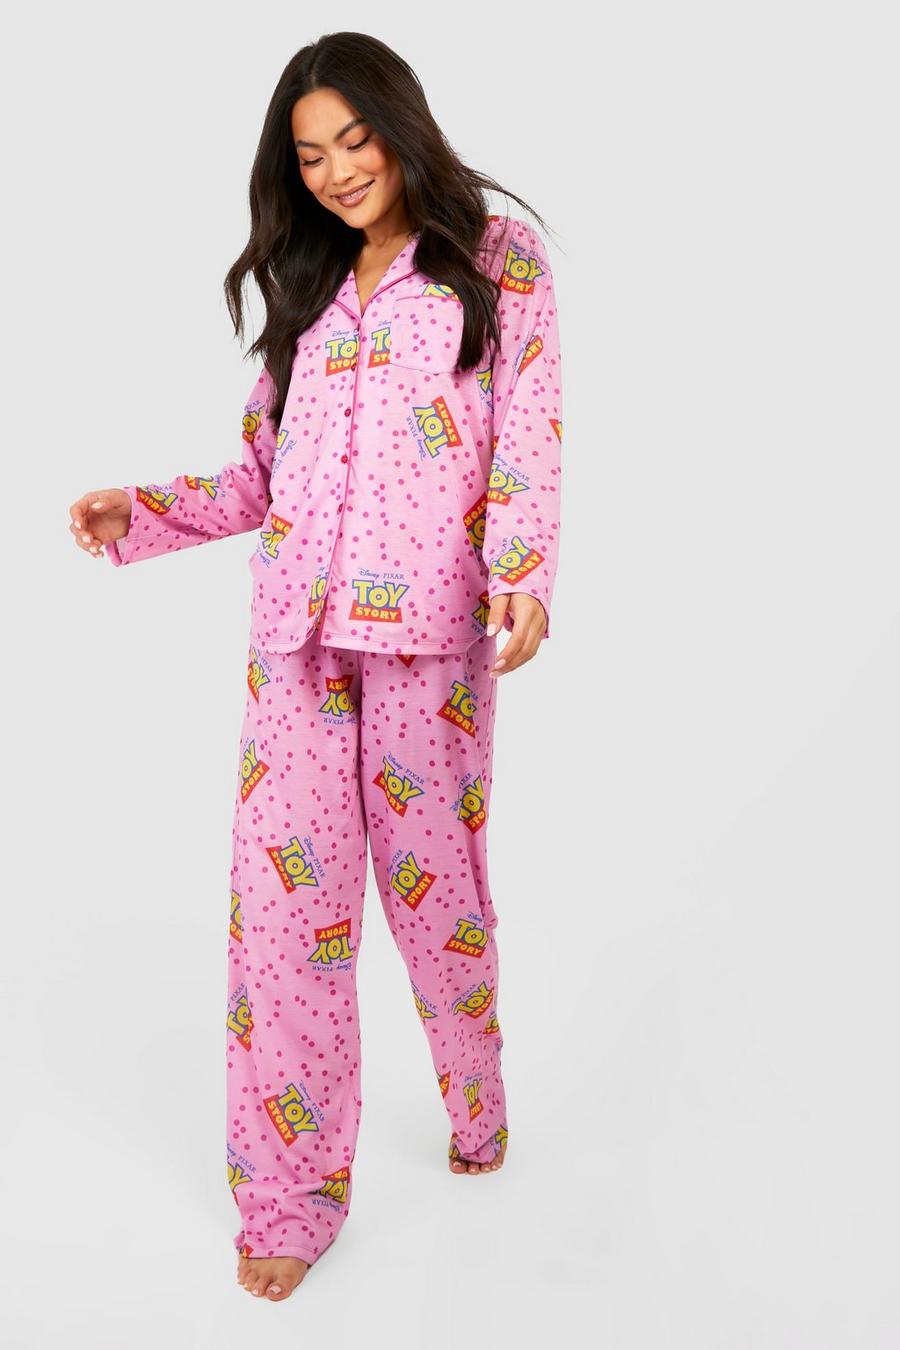 Disney Toy Story Pyjama-Set mit Knopfleiste, Pink rose